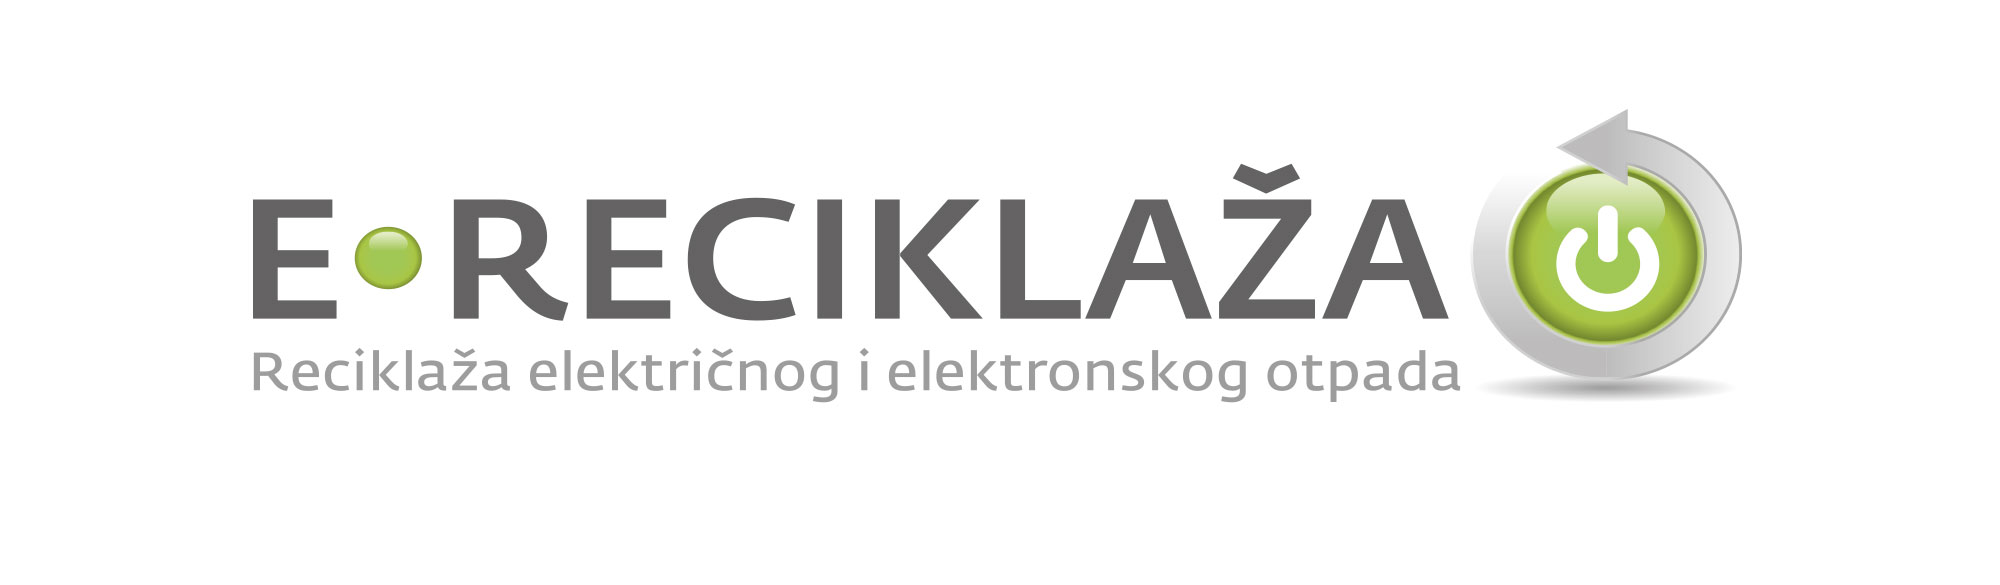 e-reciklaza logo